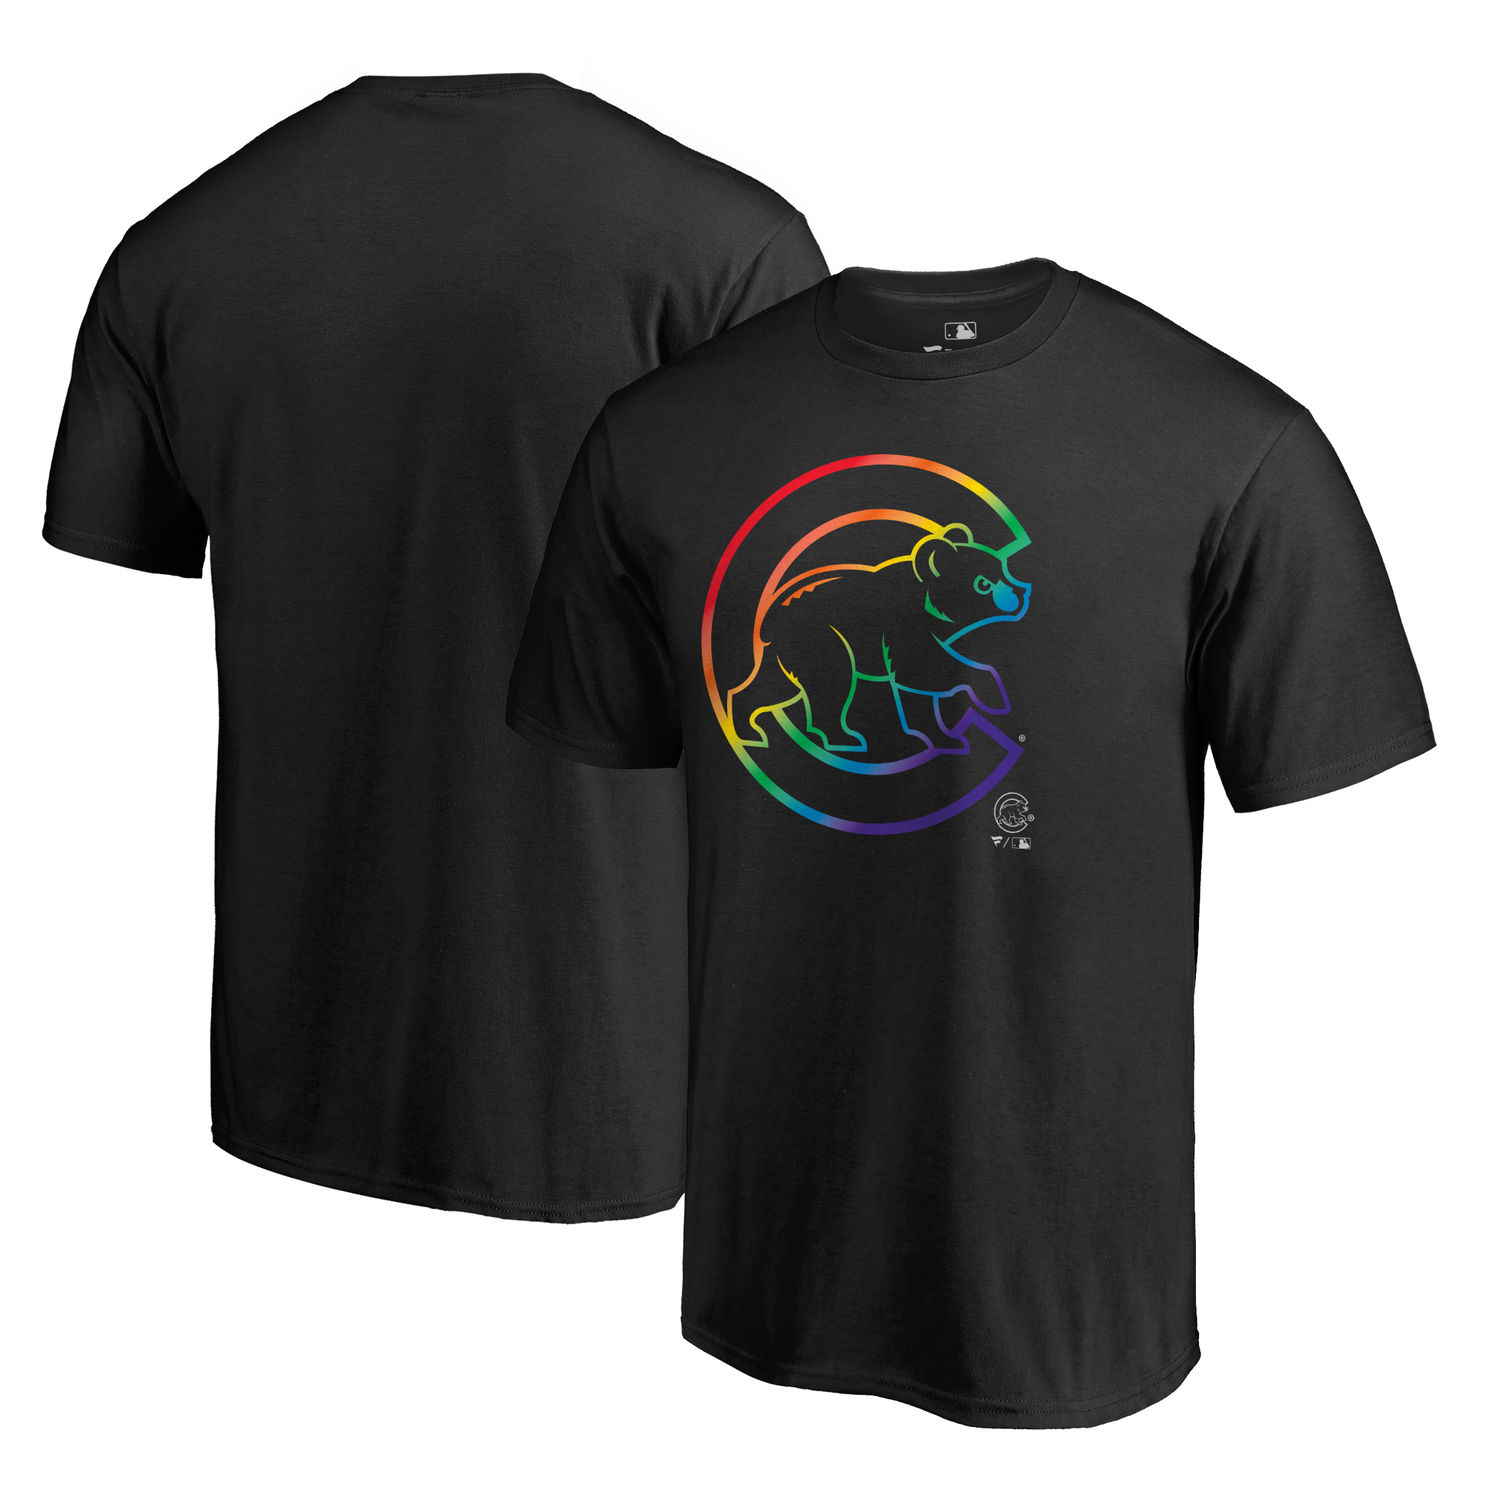 Men's Chicago Cubs Fanatics Branded Pride Black T Shirt